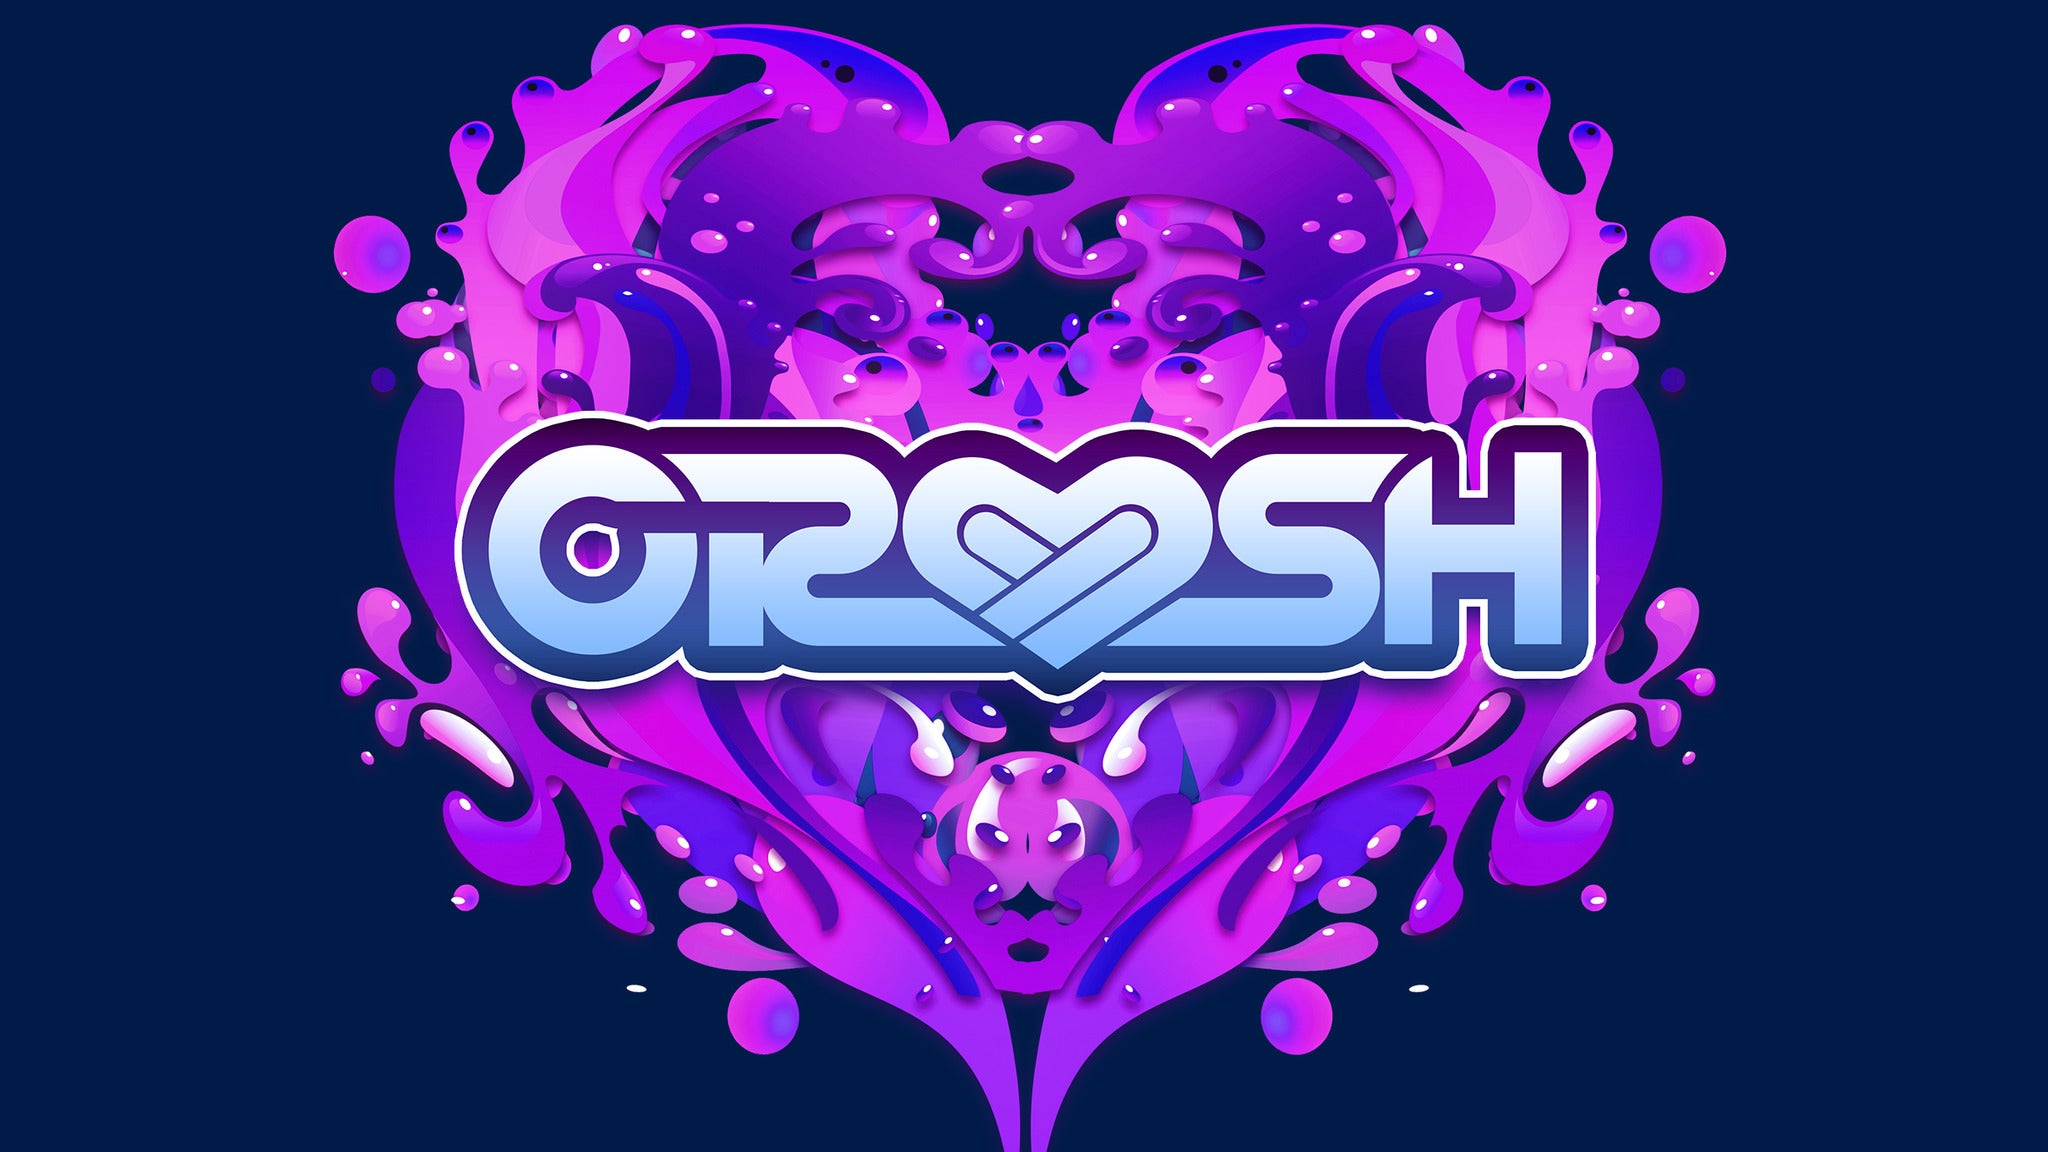 Crush - 2018 CRUSH ON YOU TOUR in North America [Wonderlost] in Seattle promo photo for Citi® Cardmember Preferred presale offer code